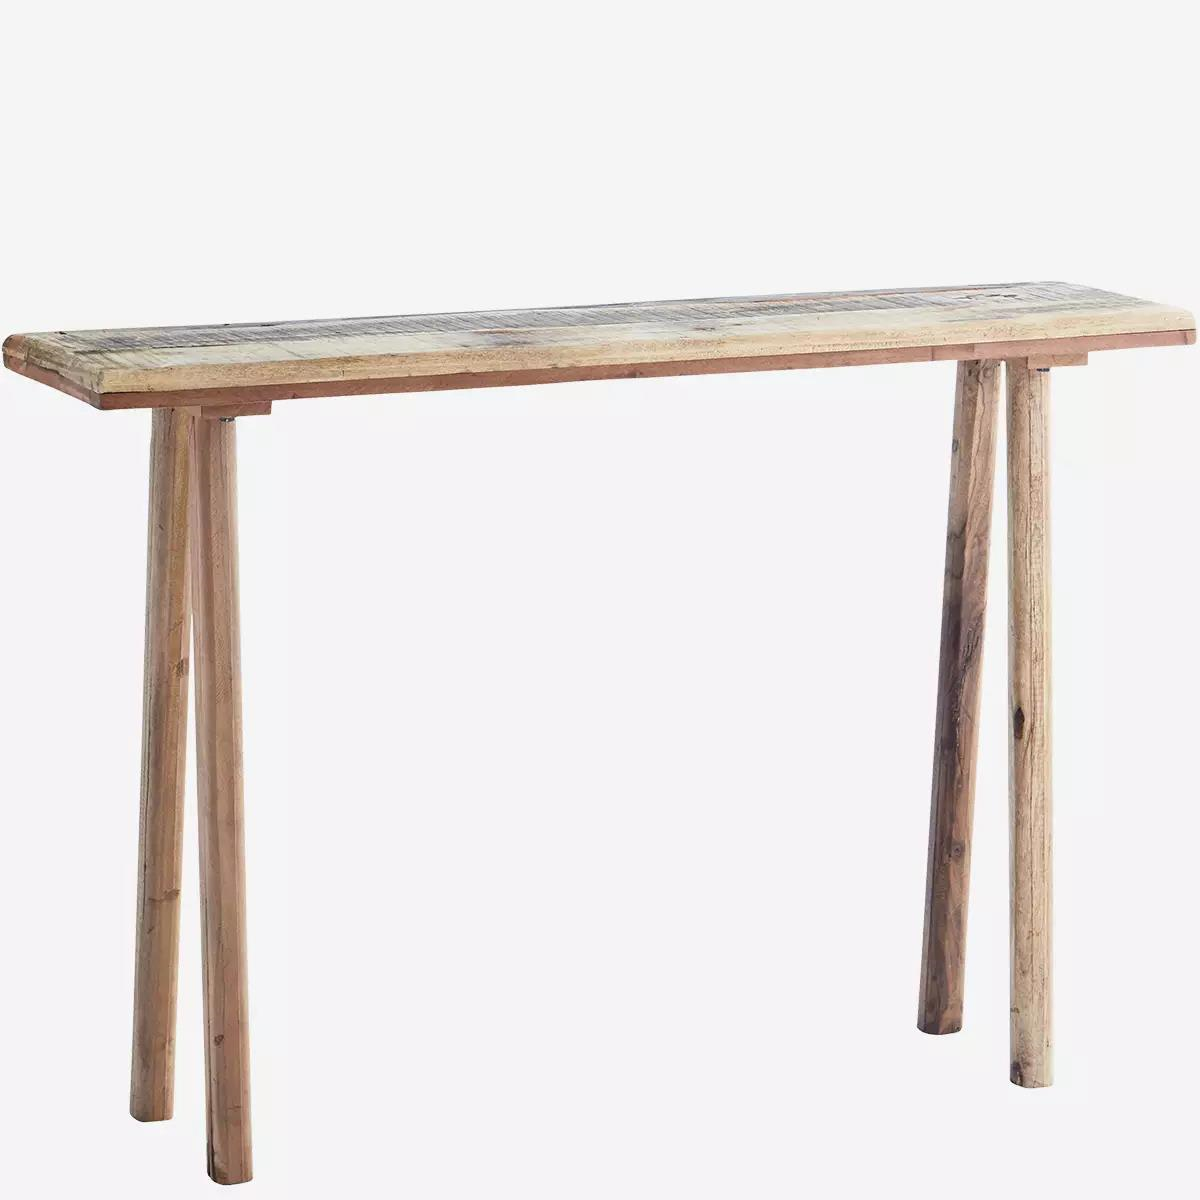 MADAM STOLTZ Wooden console table